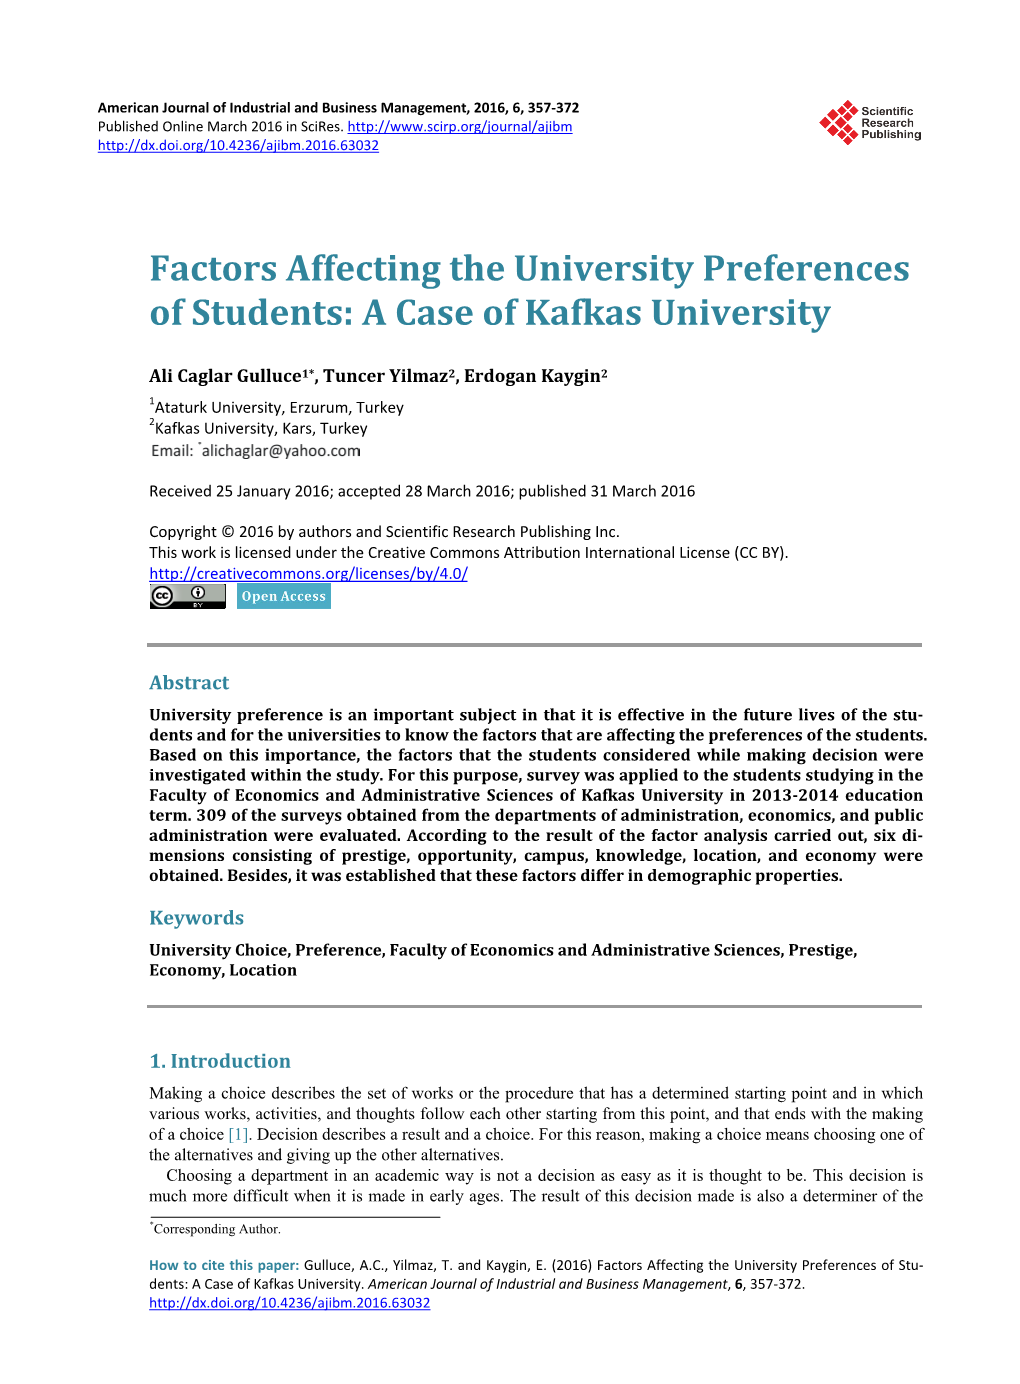 Factors Affecting the University Preferences of Students: a Case of Kafkas University